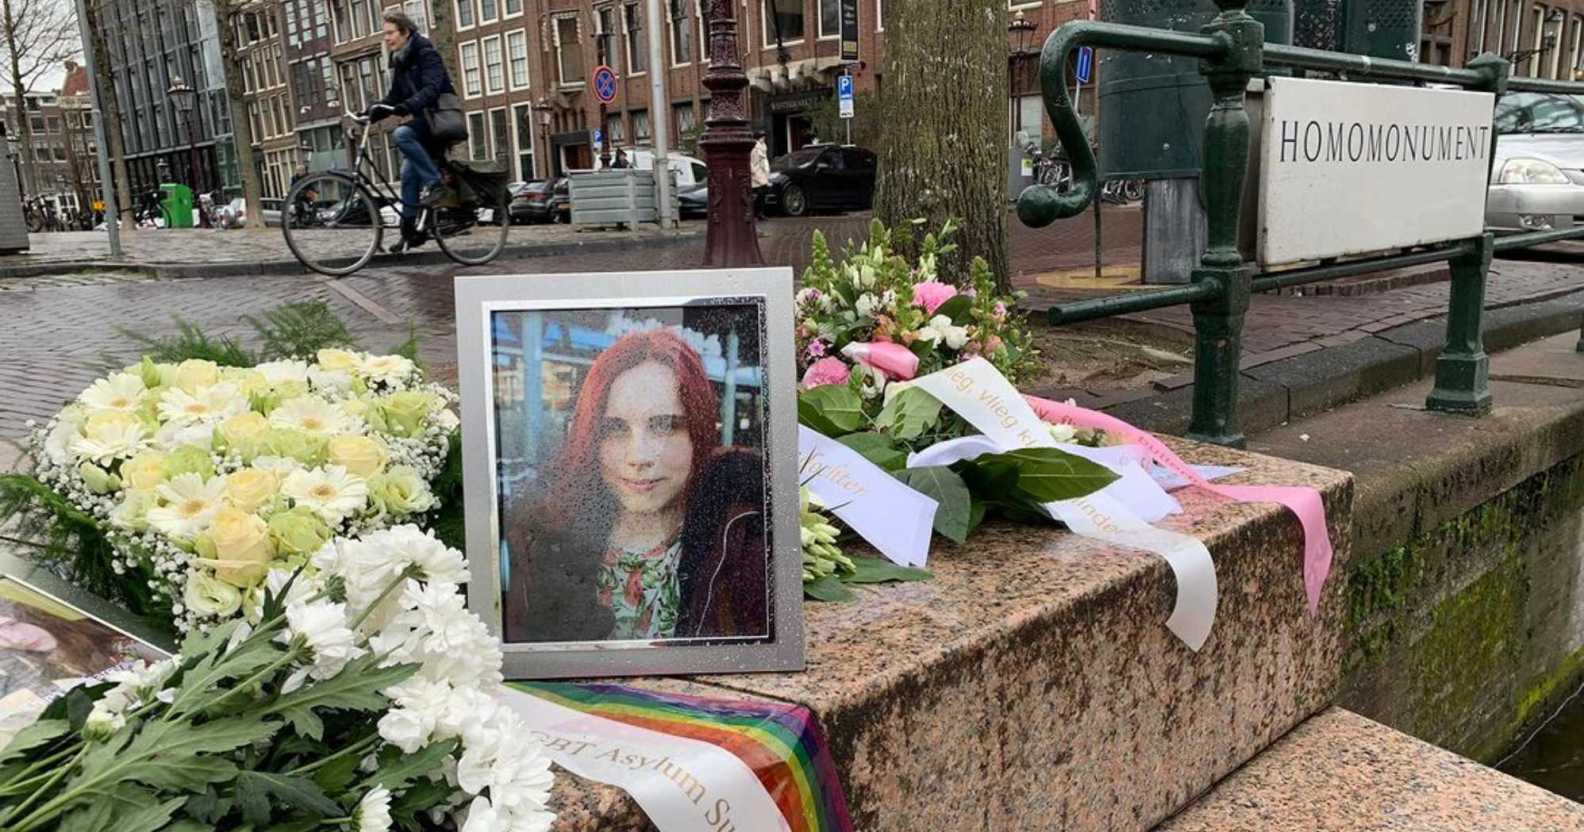 Flowers laid next to Khina Zakharova's photograph